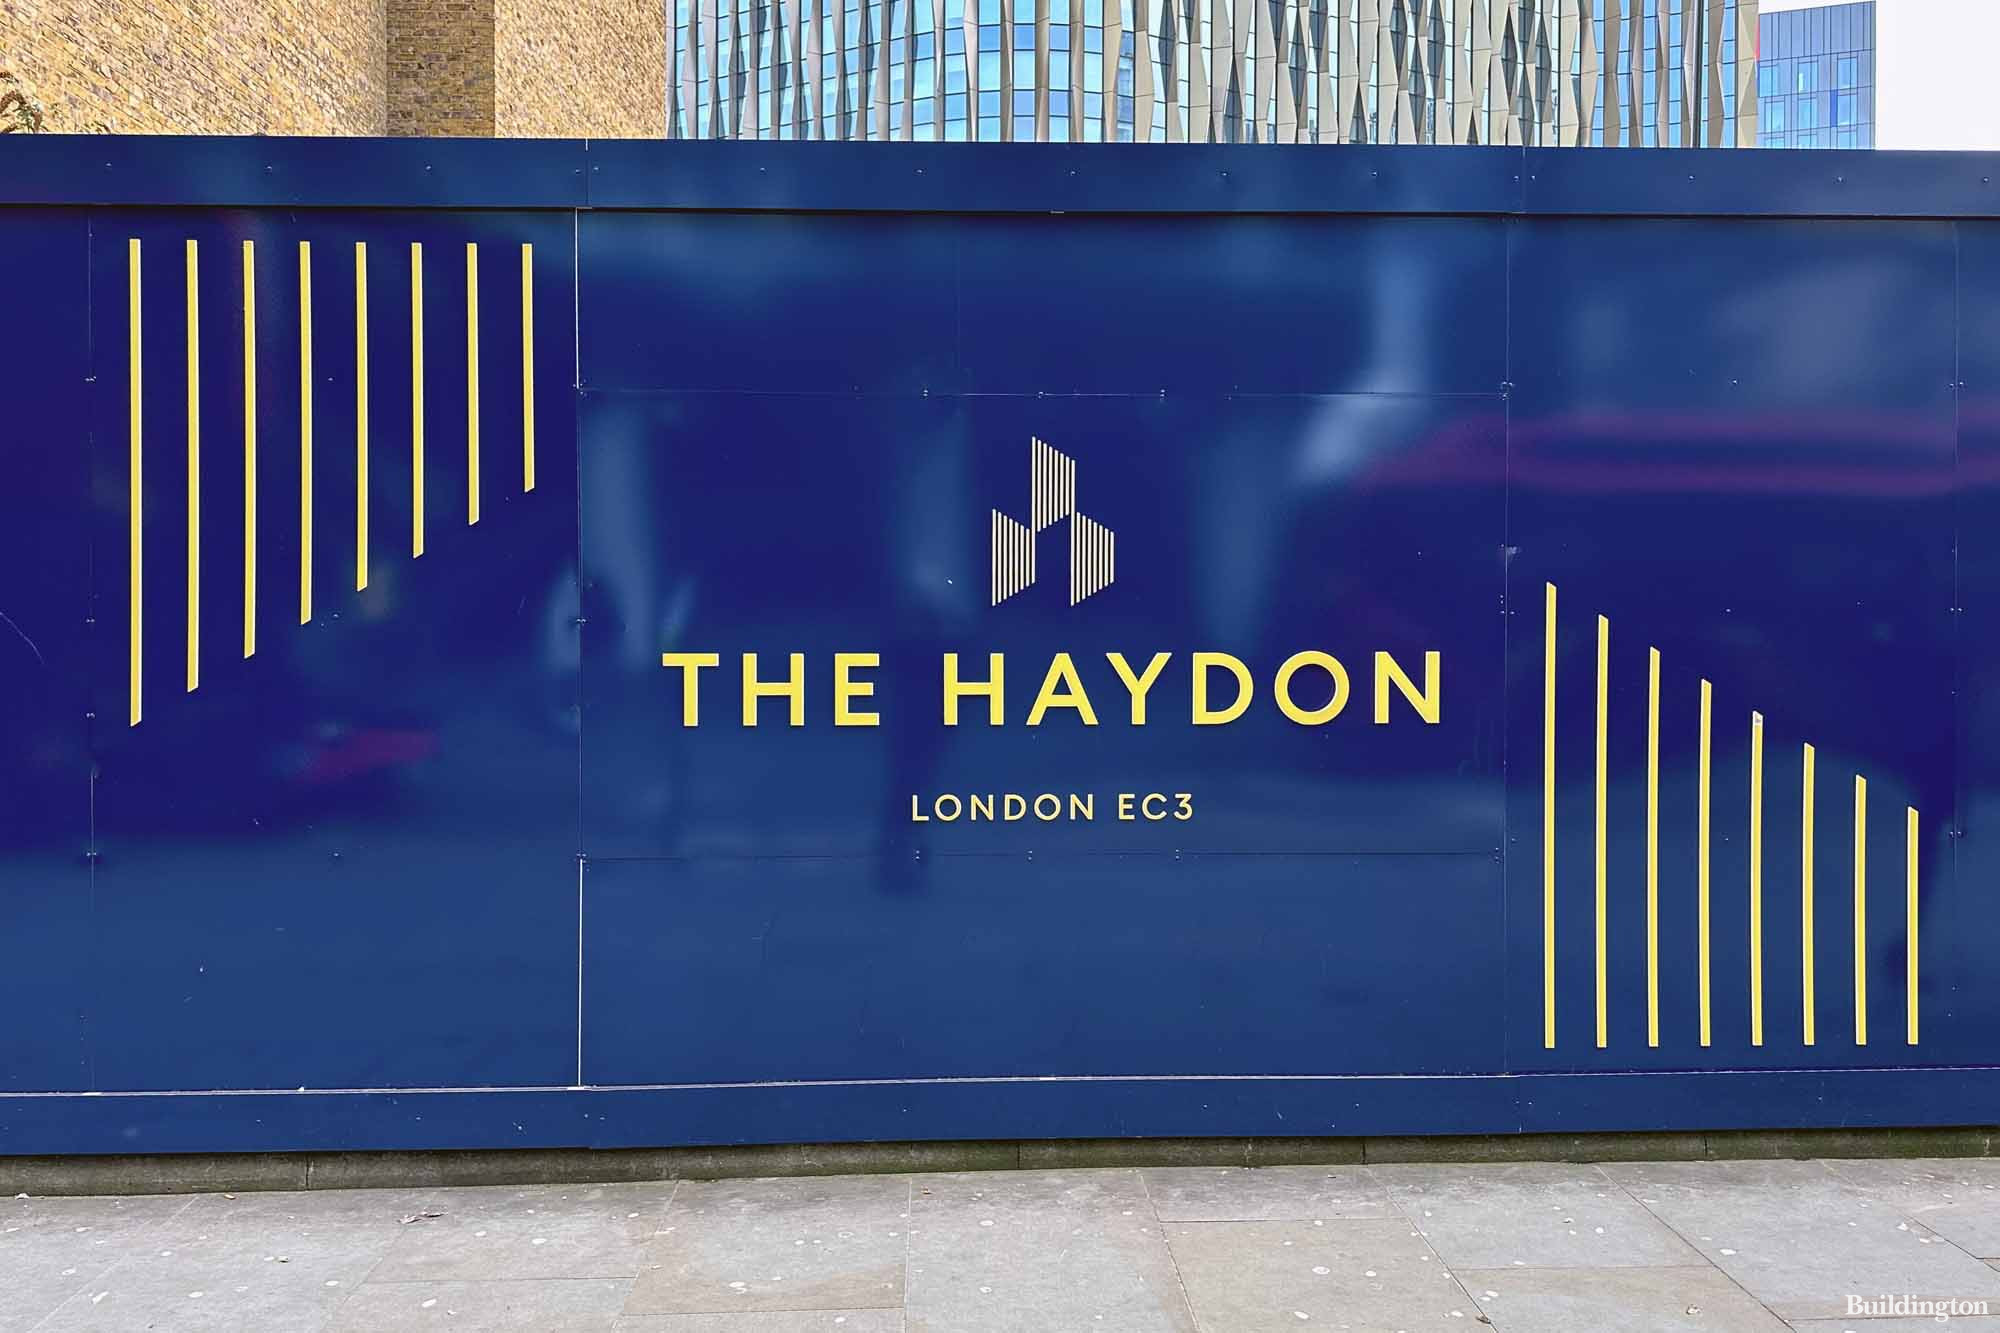 The Haydon logo on the hoarding in Aldgate, London E1